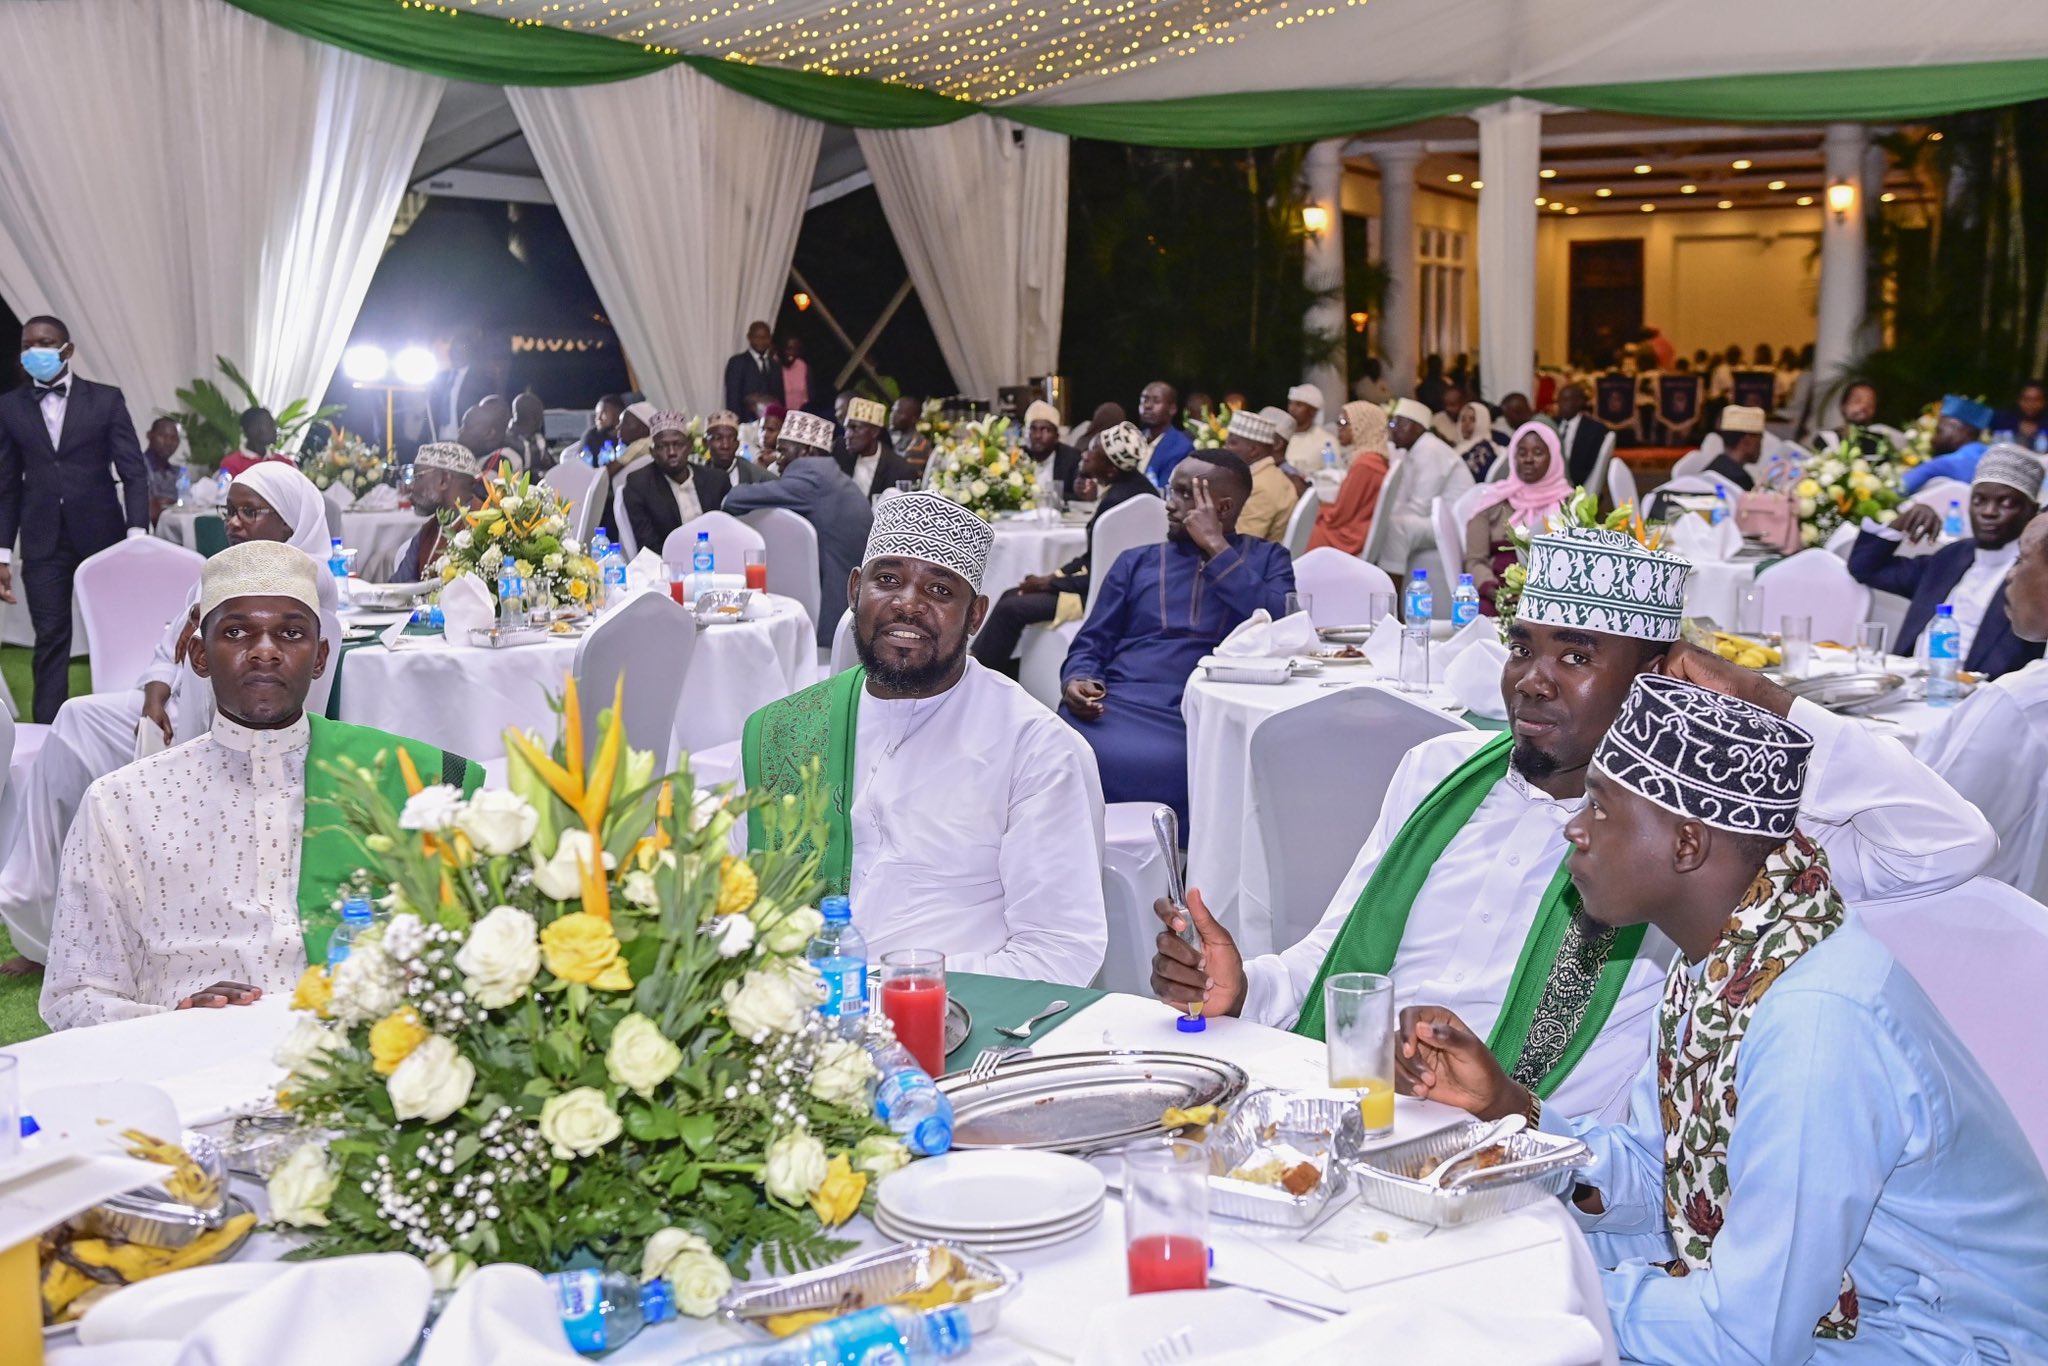 President Museveni Hosts Iftar Dinner with Muslim Community